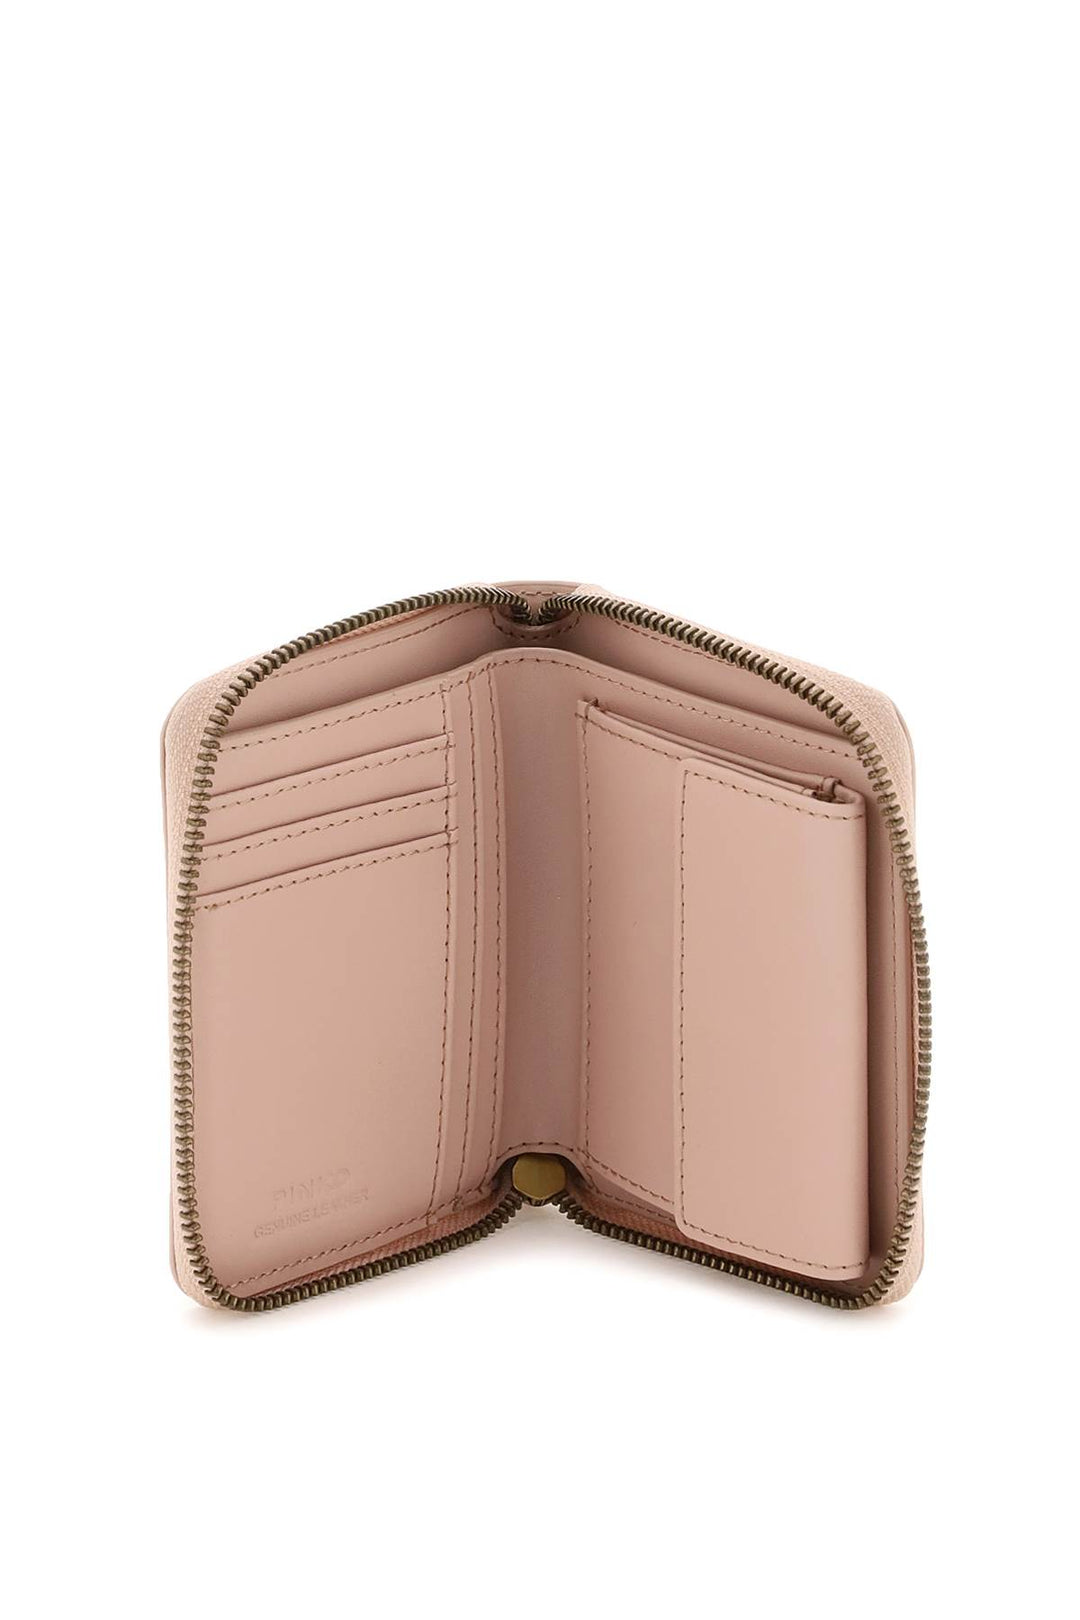 Pinko Leather Zip Around Wallet   Rosa